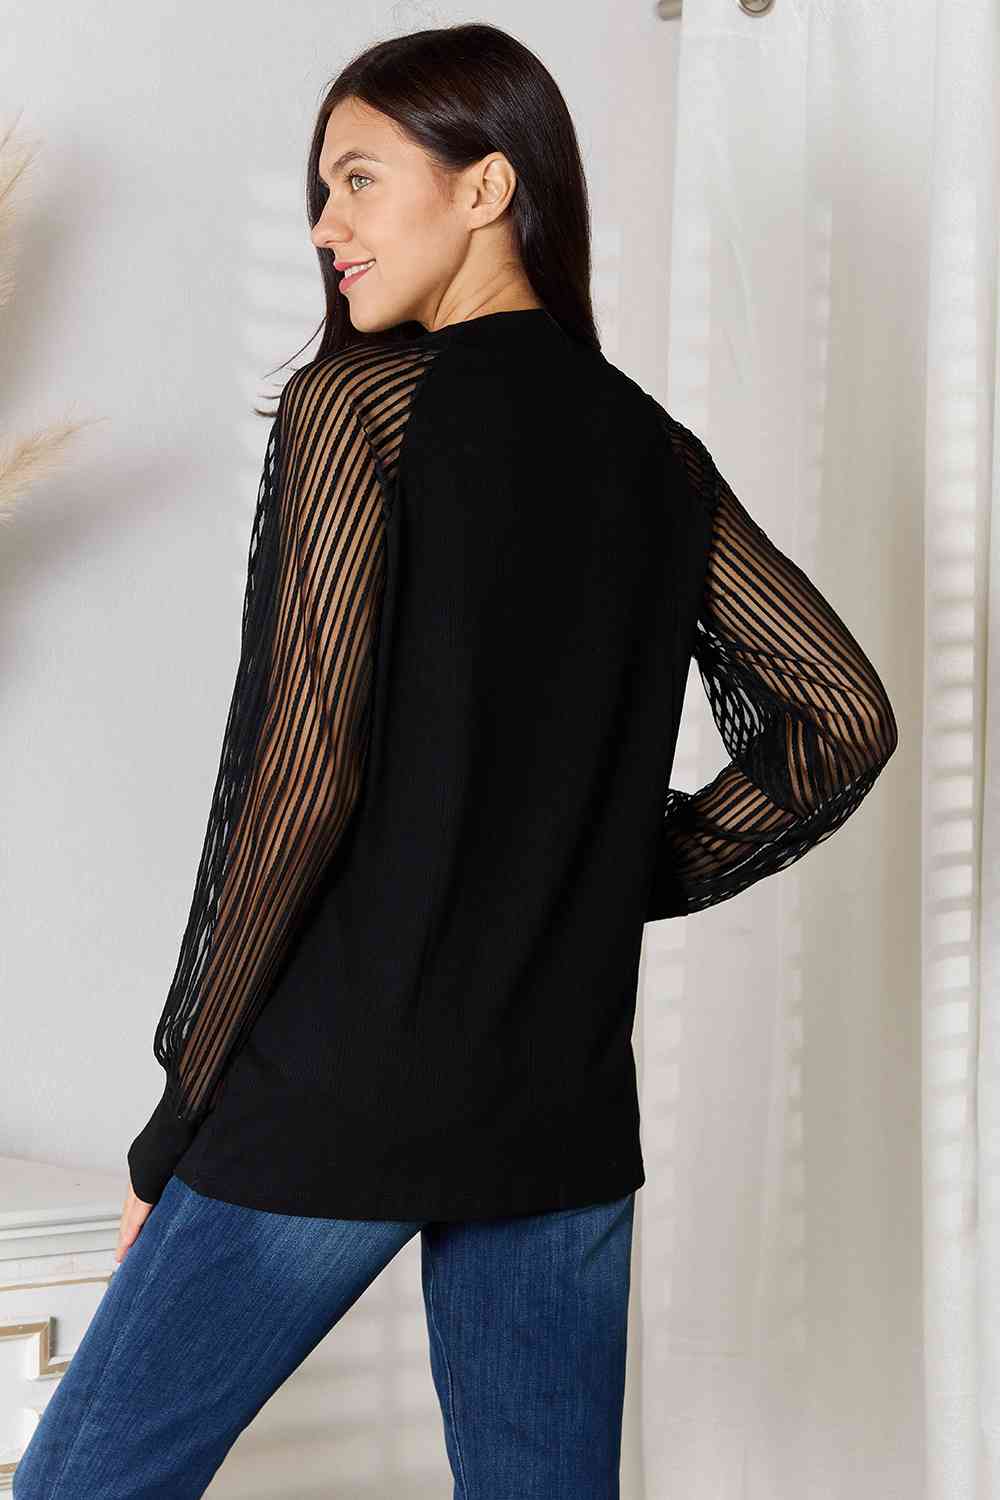 Back view of sheer long sleeve black blouse